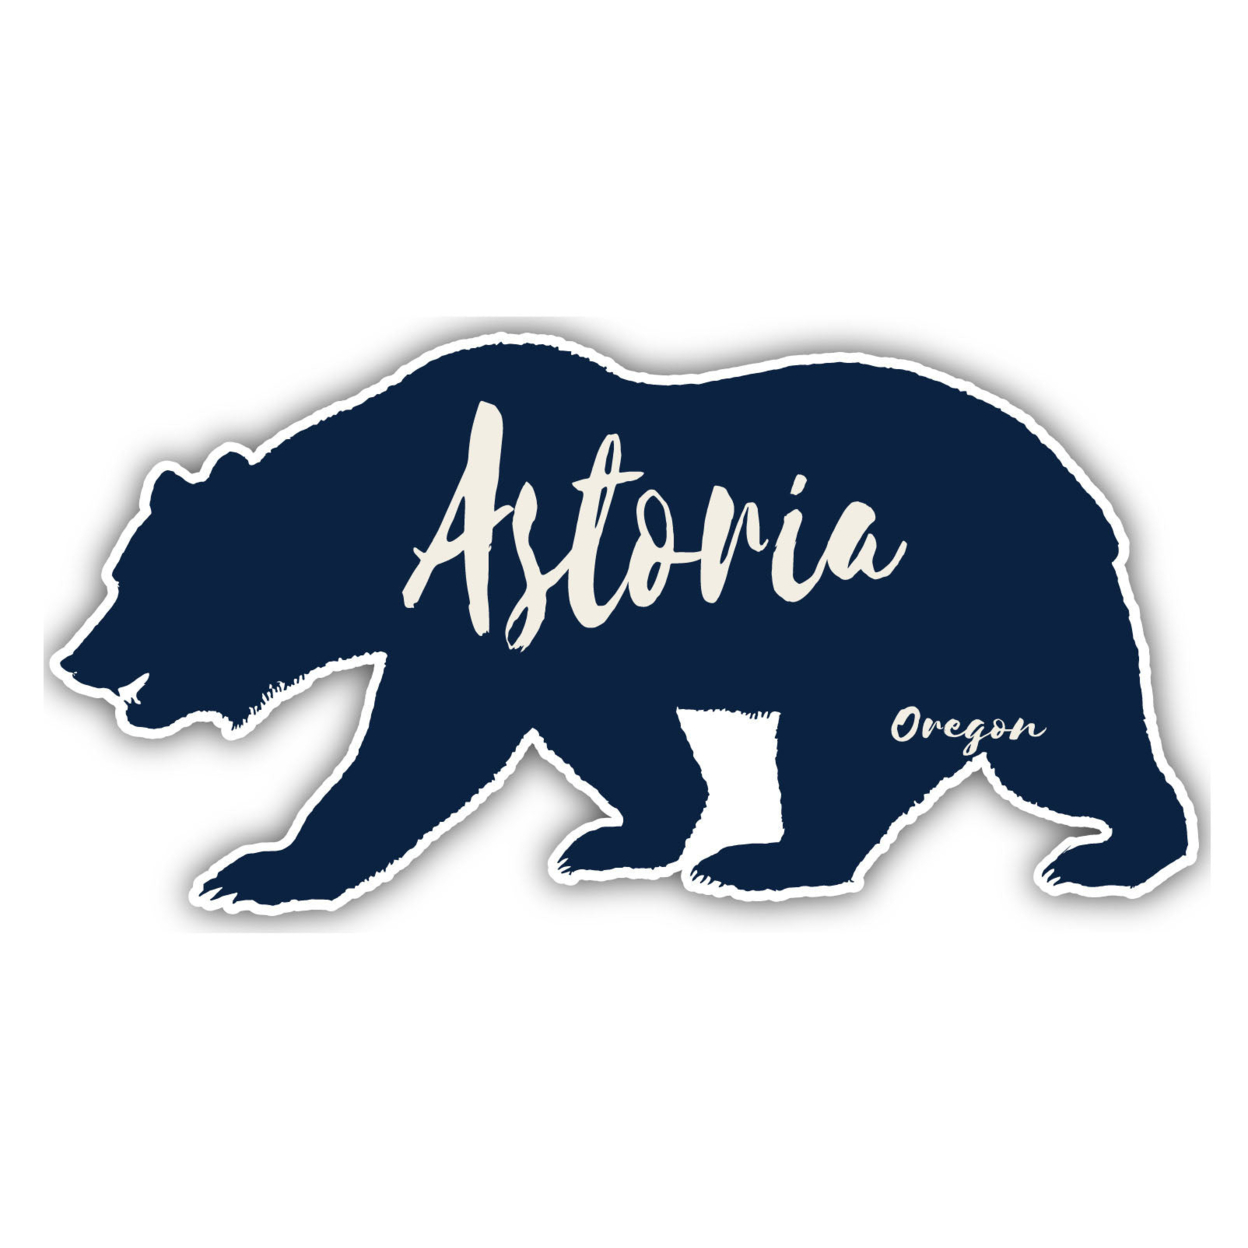 Astoria Oregon Souvenir Decorative Stickers (Choose Theme And Size) - 4-Pack, 8-Inch, Tent